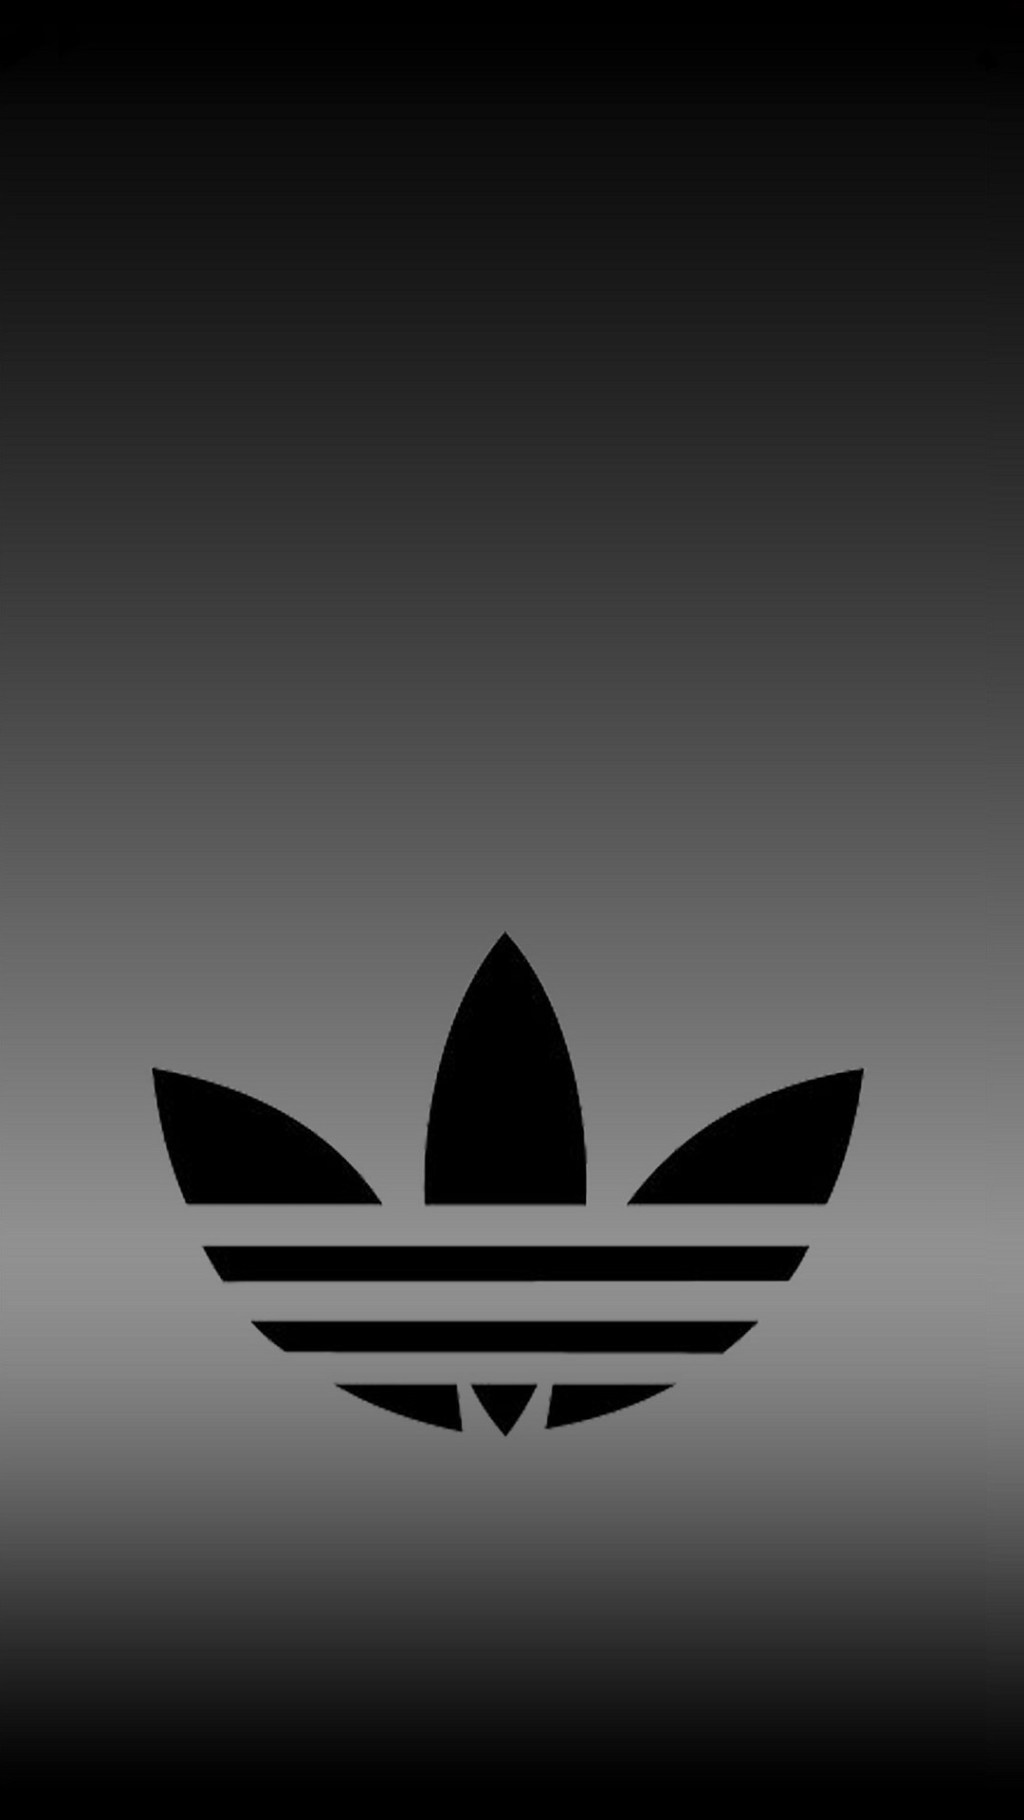 3D iPhone Wallpaper on X: Adidas Logo iPhone 6 Wallpaper    / X